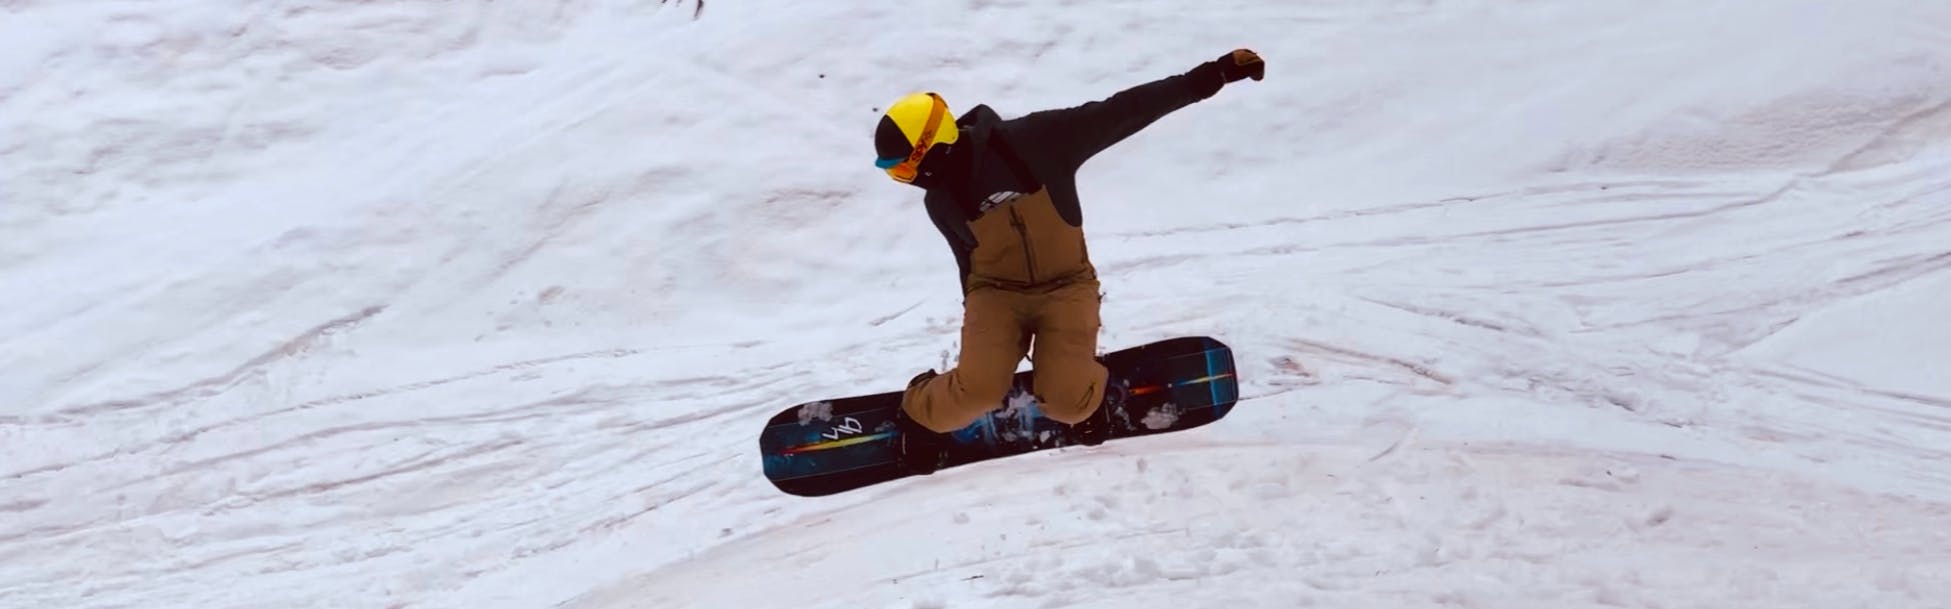 Nathan G. doing a snowboard jump.